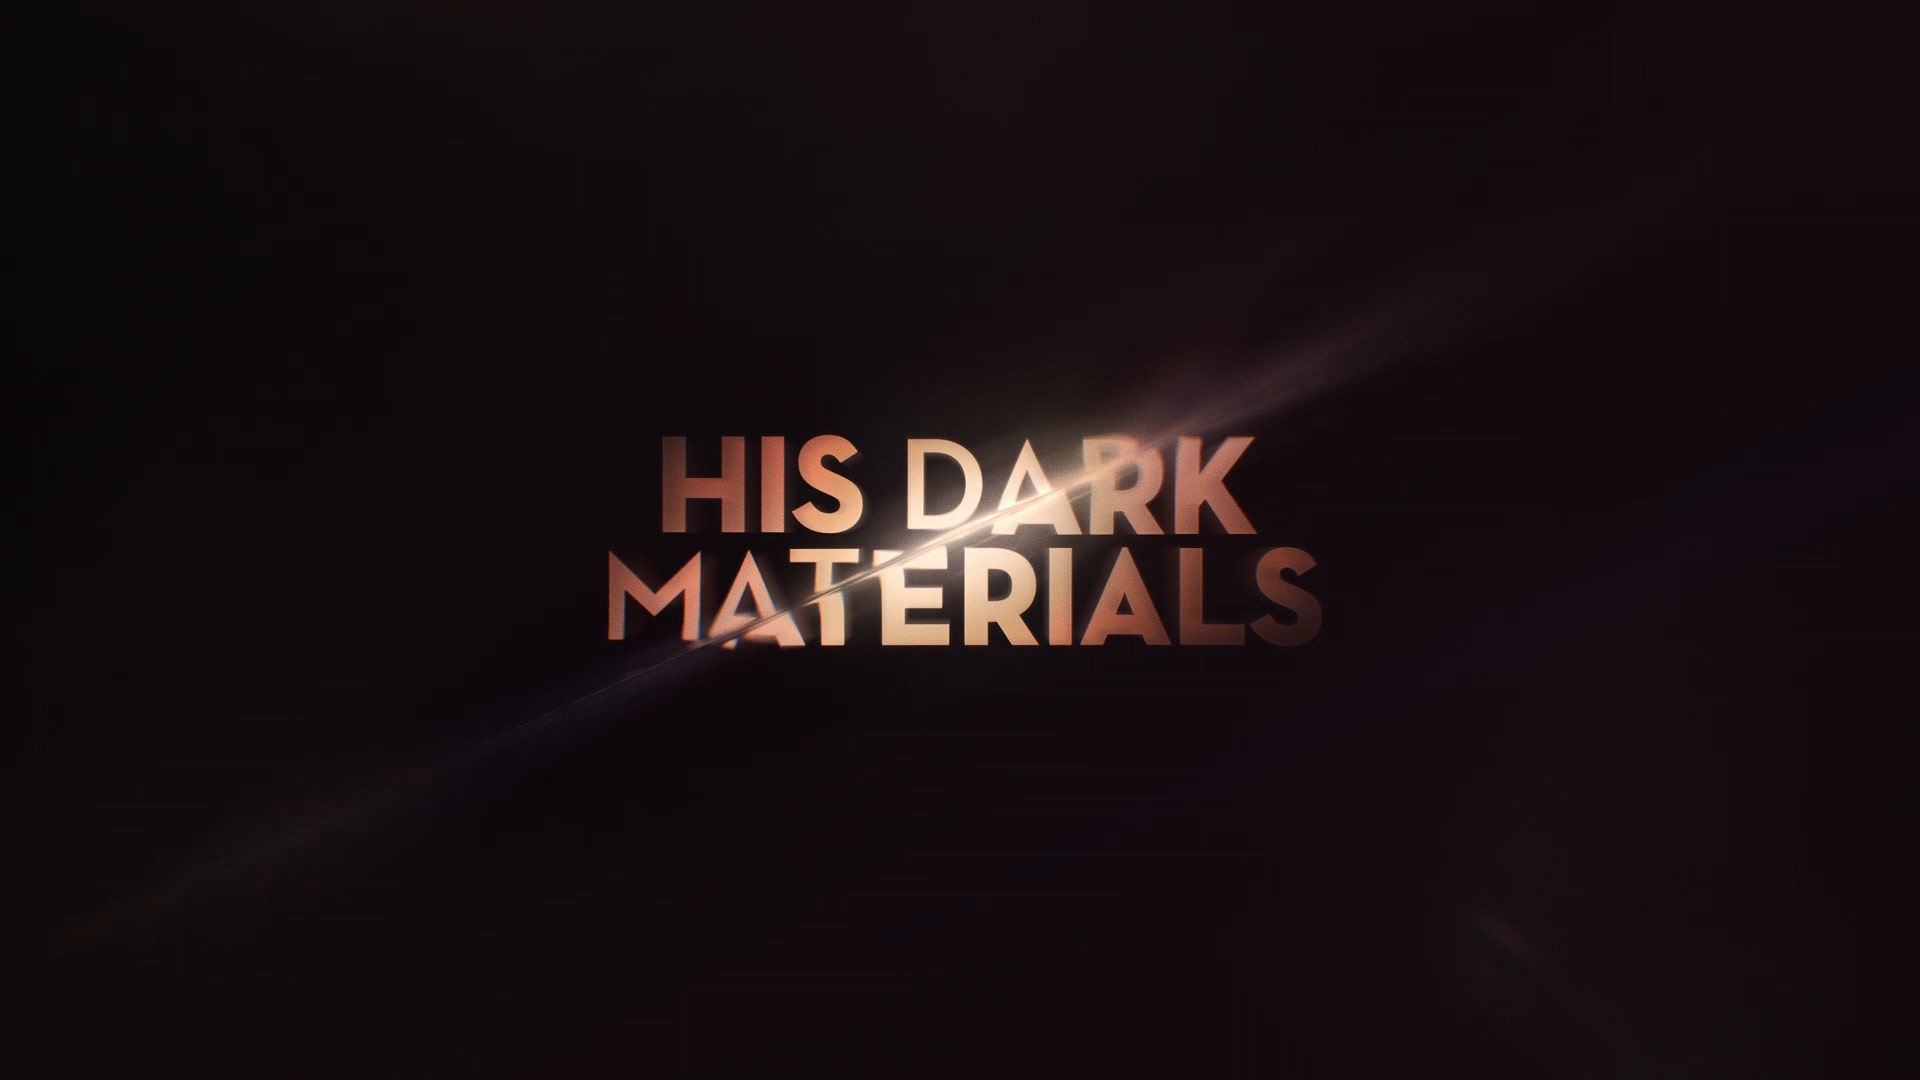 Dark Materials 4K Wallpapers